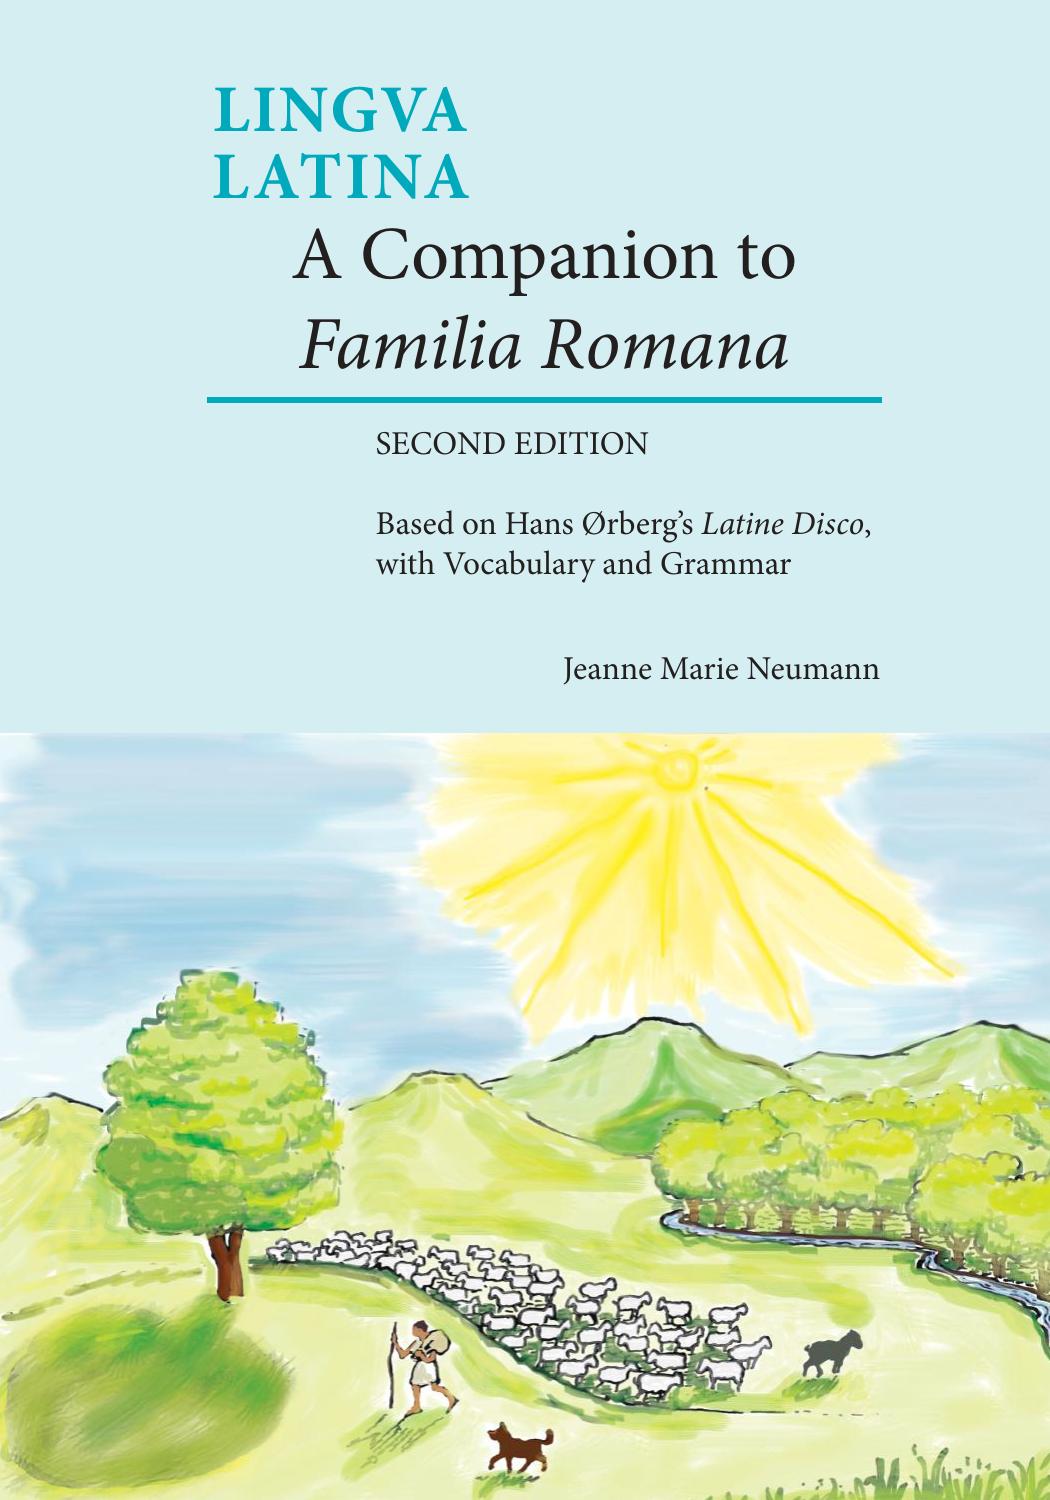 A Companion to Familia Romana: Based on Hans Ørberg's Latine Disco, with Vocabulary and Grammar